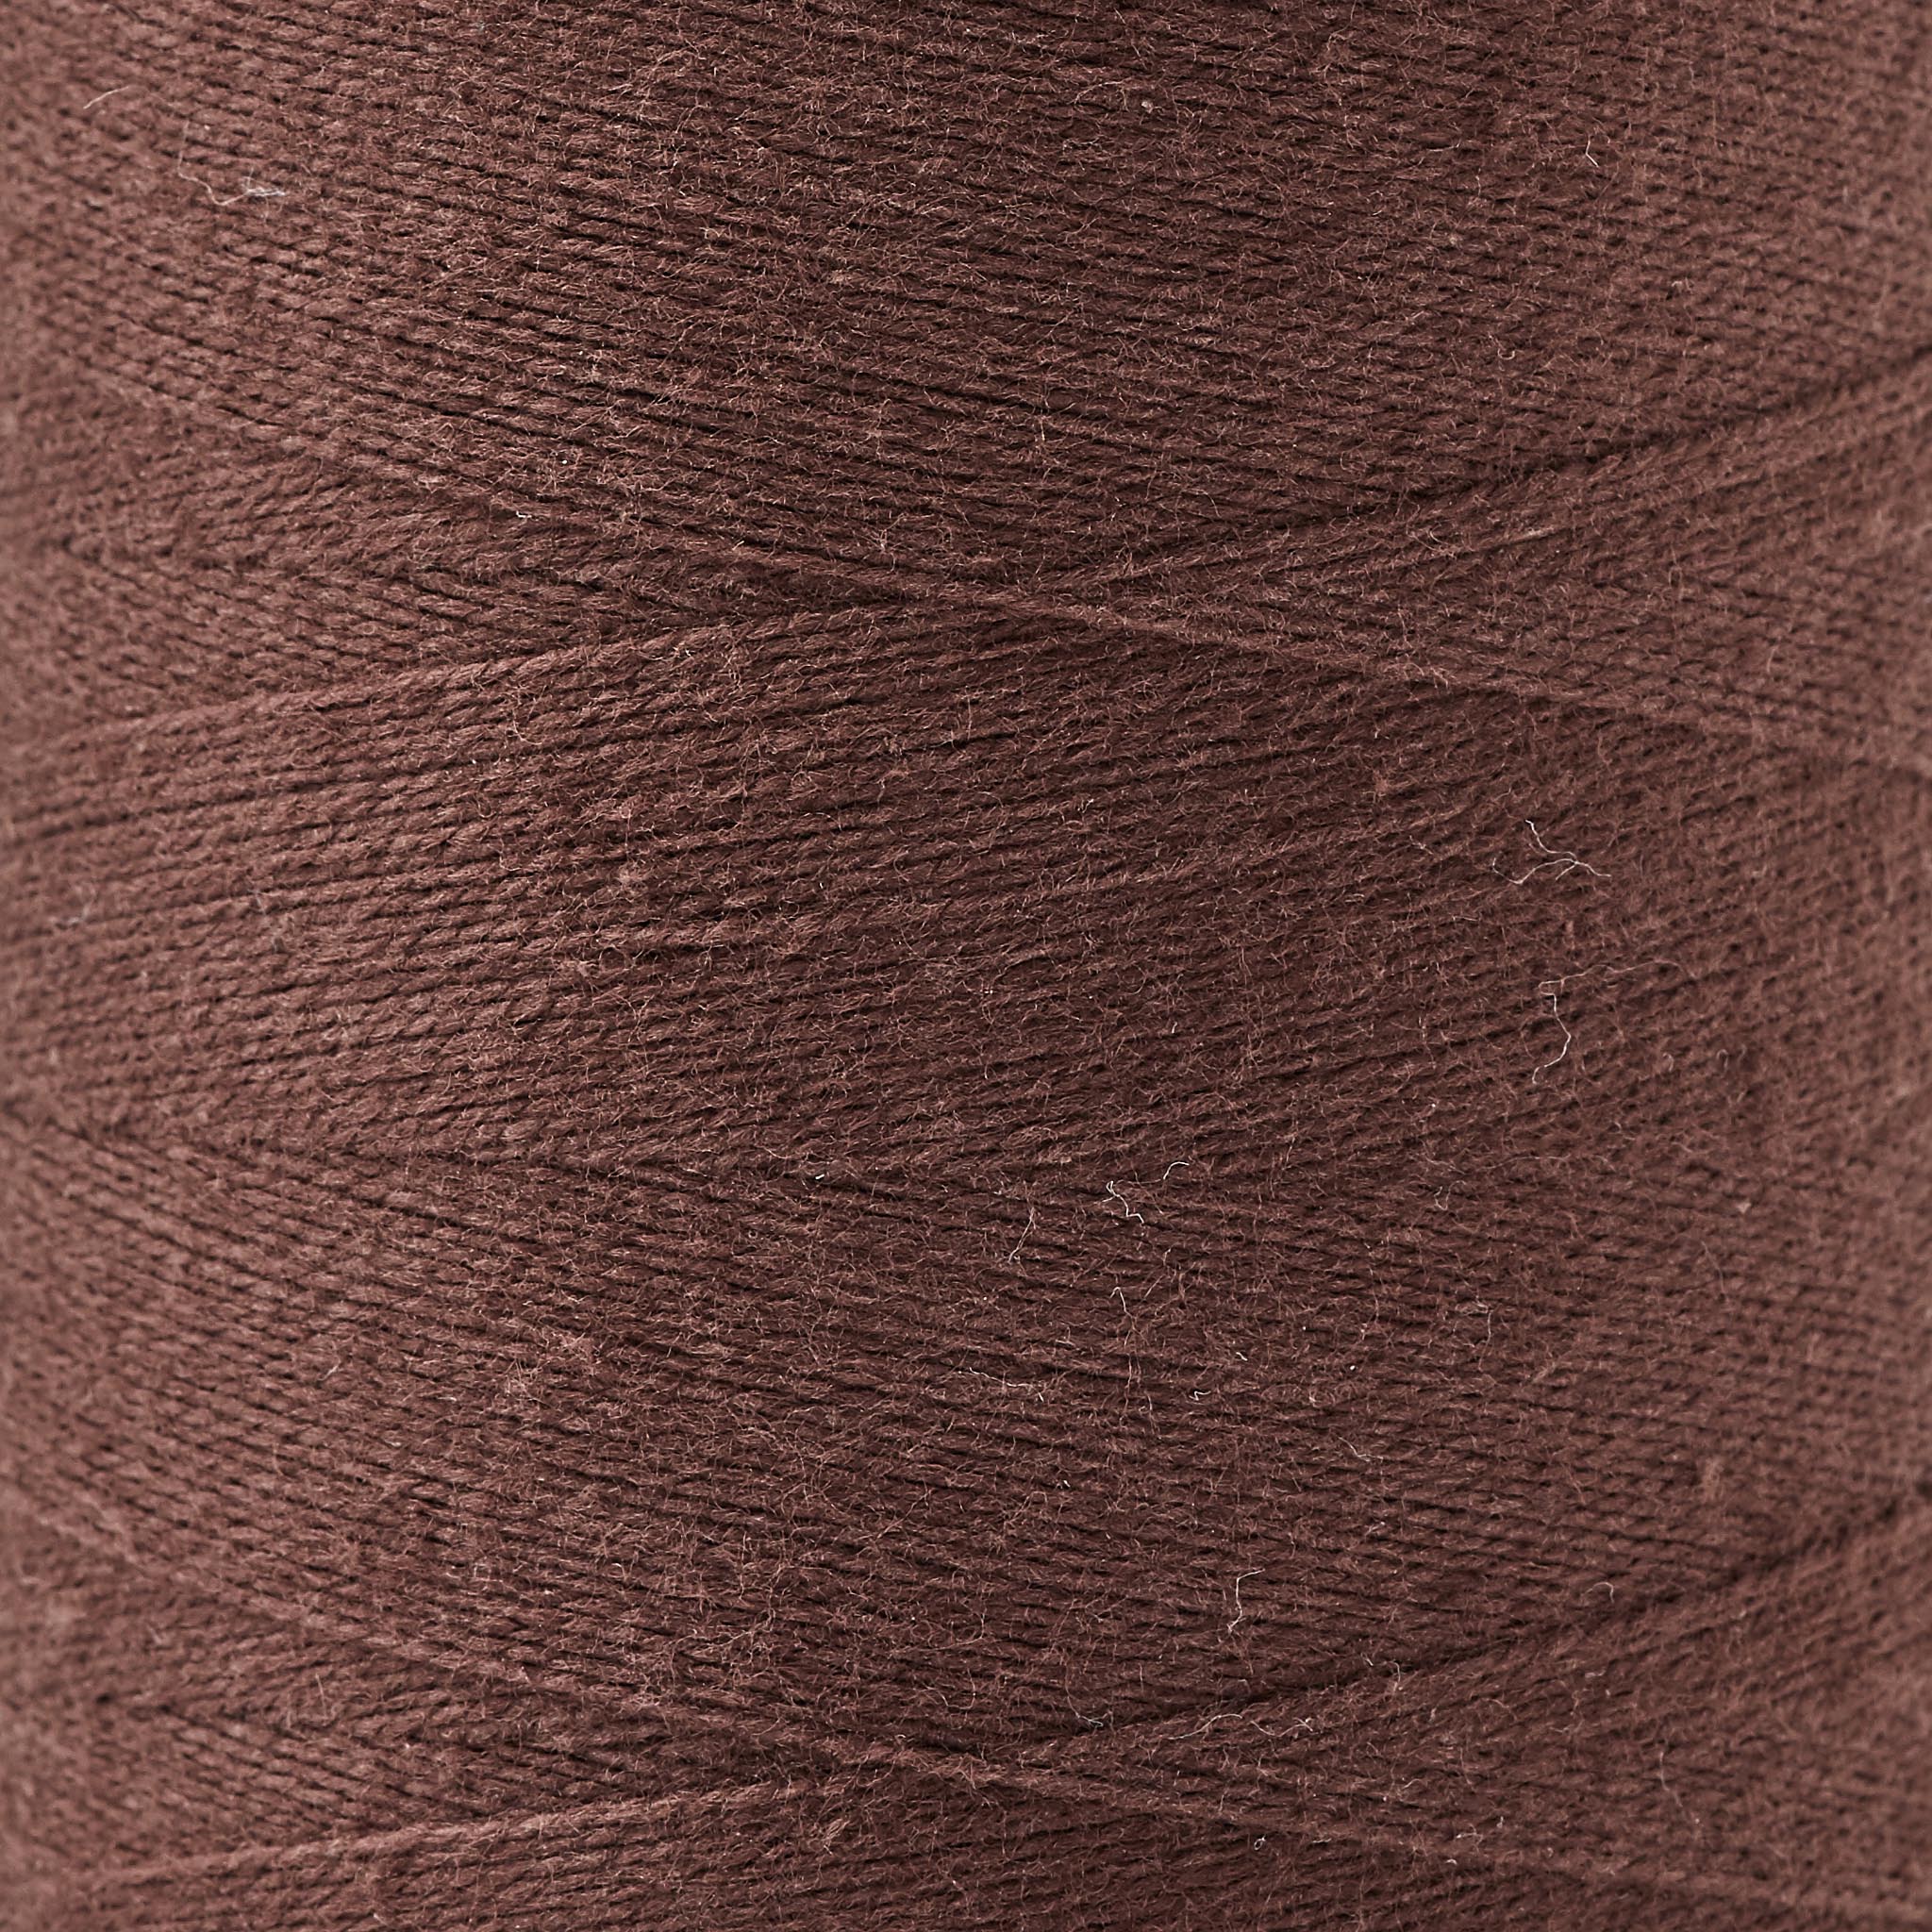 8/2 Un-Mercerized Cotton Weaving Yarn ~ Sage - Gist Yarn